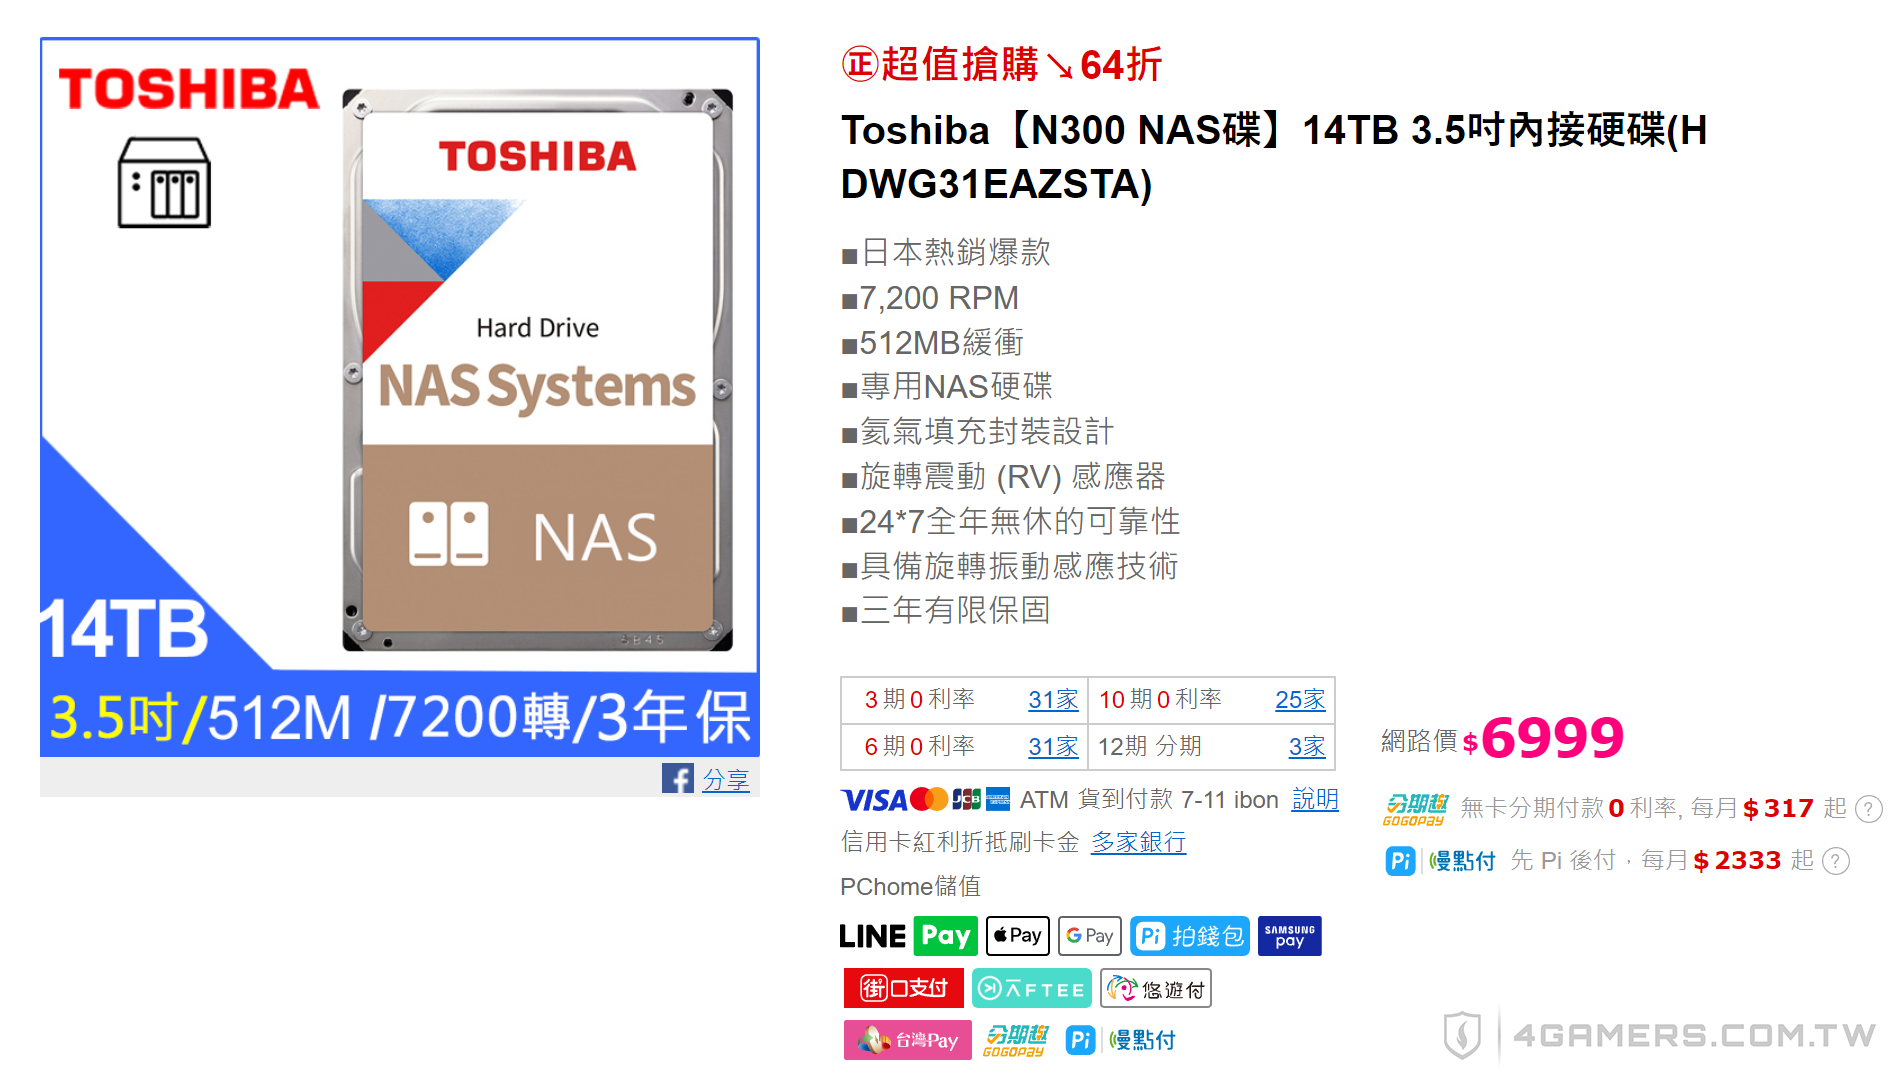 TOSHIBA N300 NAS HDD 14TB